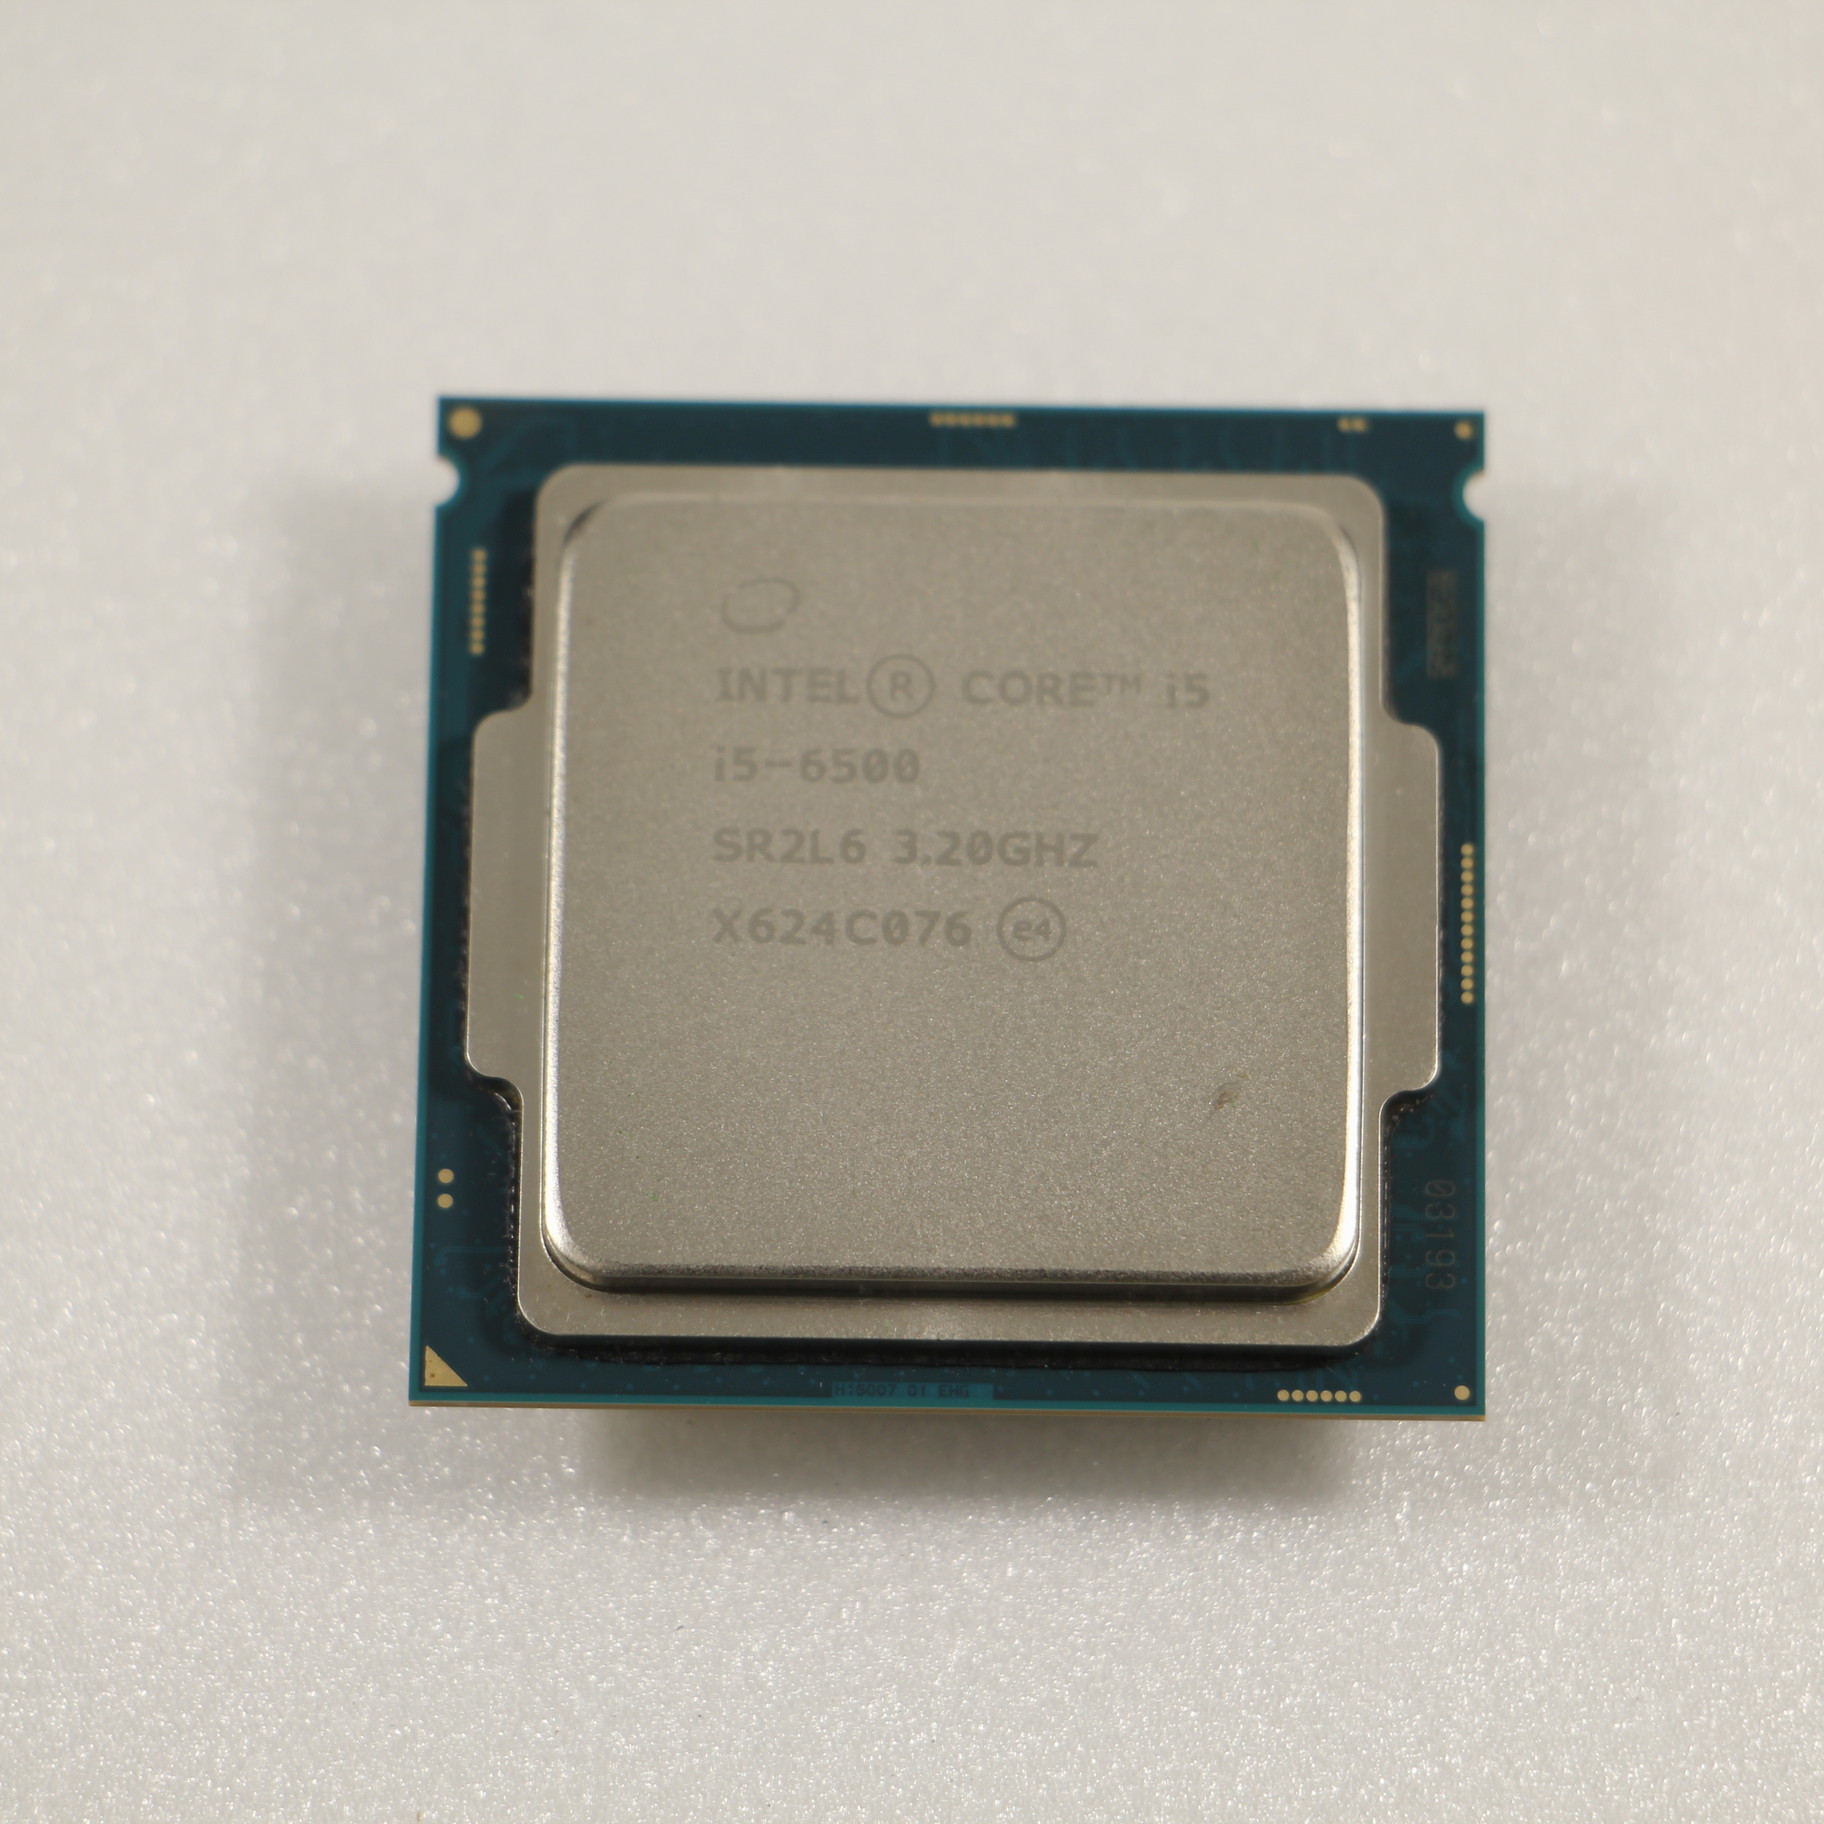 intel　core i5-6500